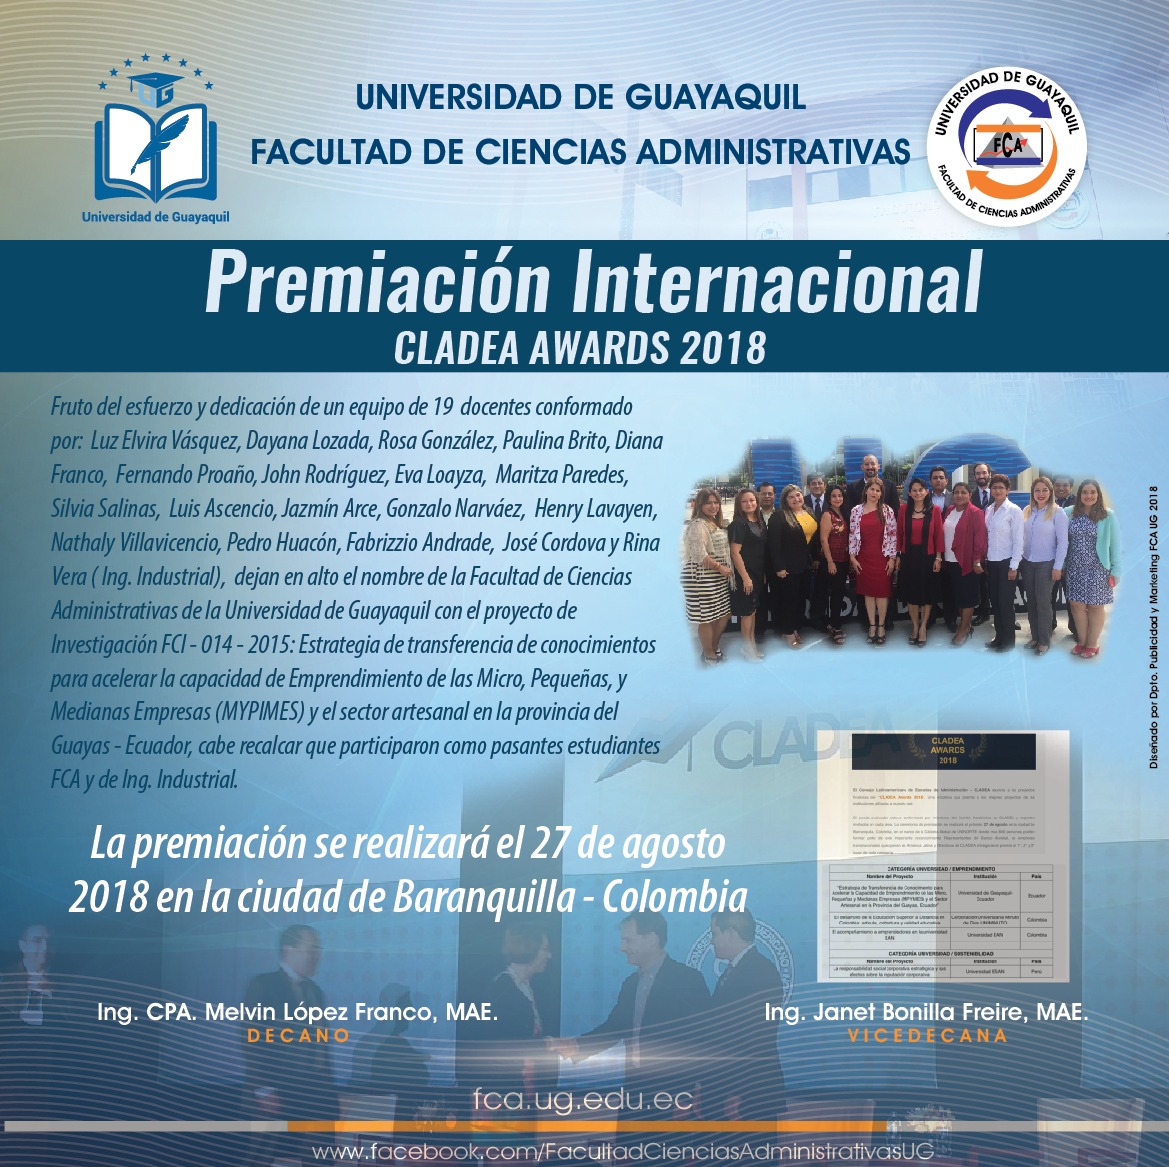 Premio Internacional Cladea